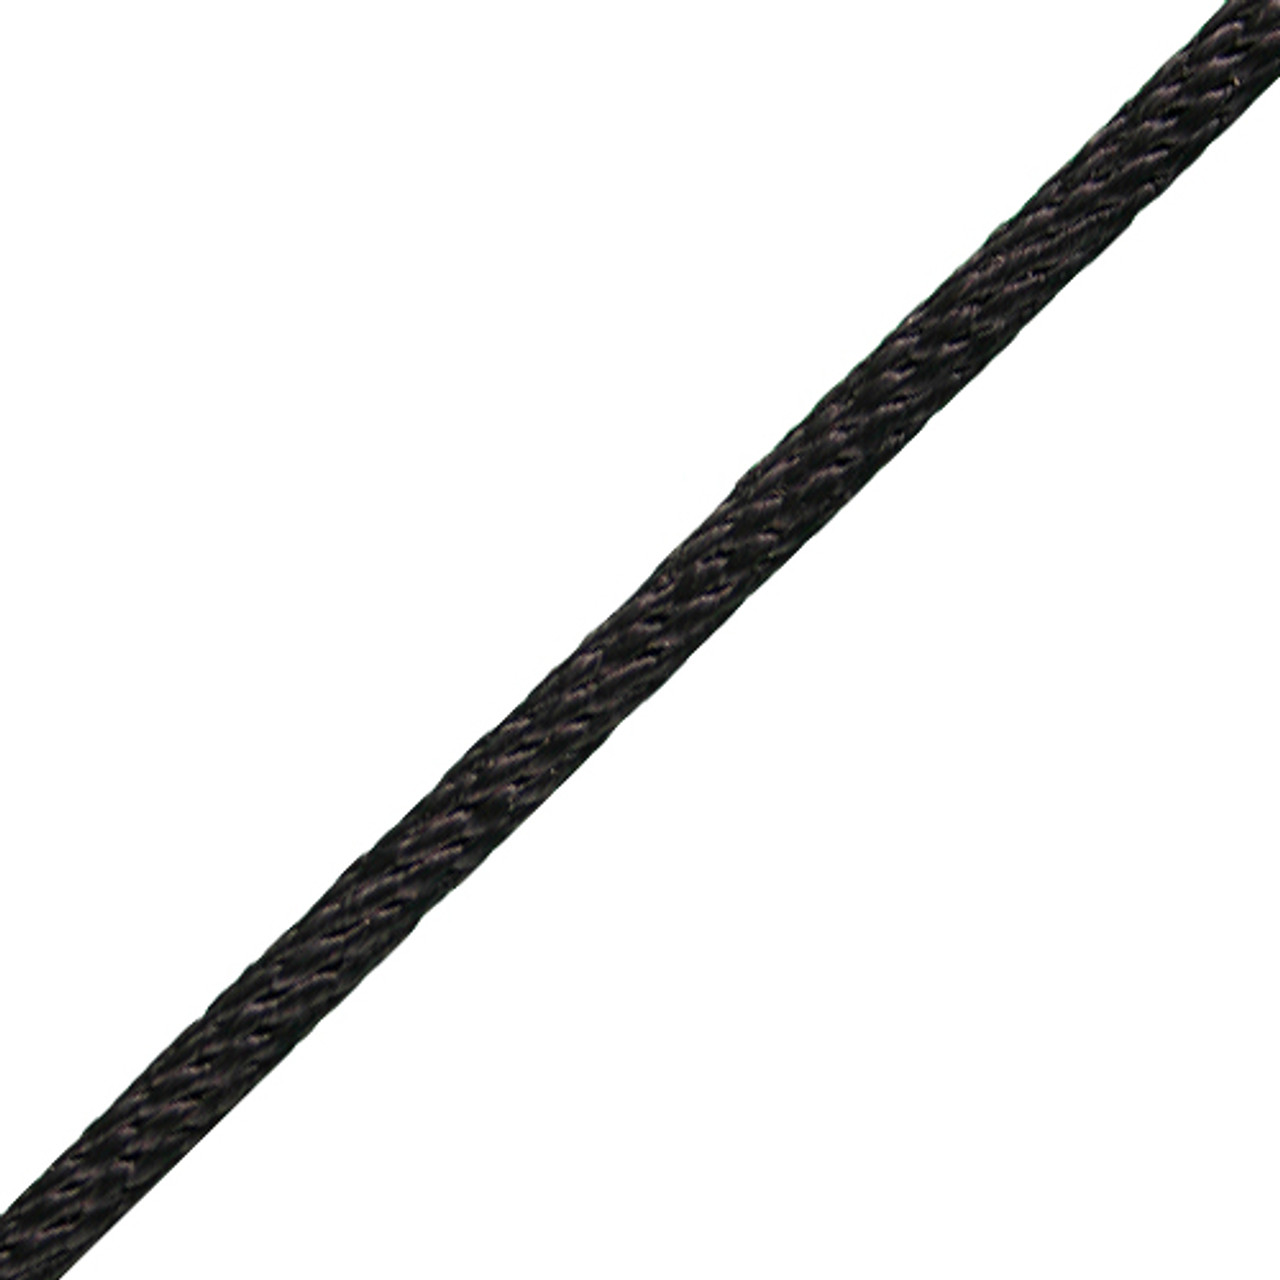  Black Nylon Braided Cord Extra Strong Multi-Use Thread